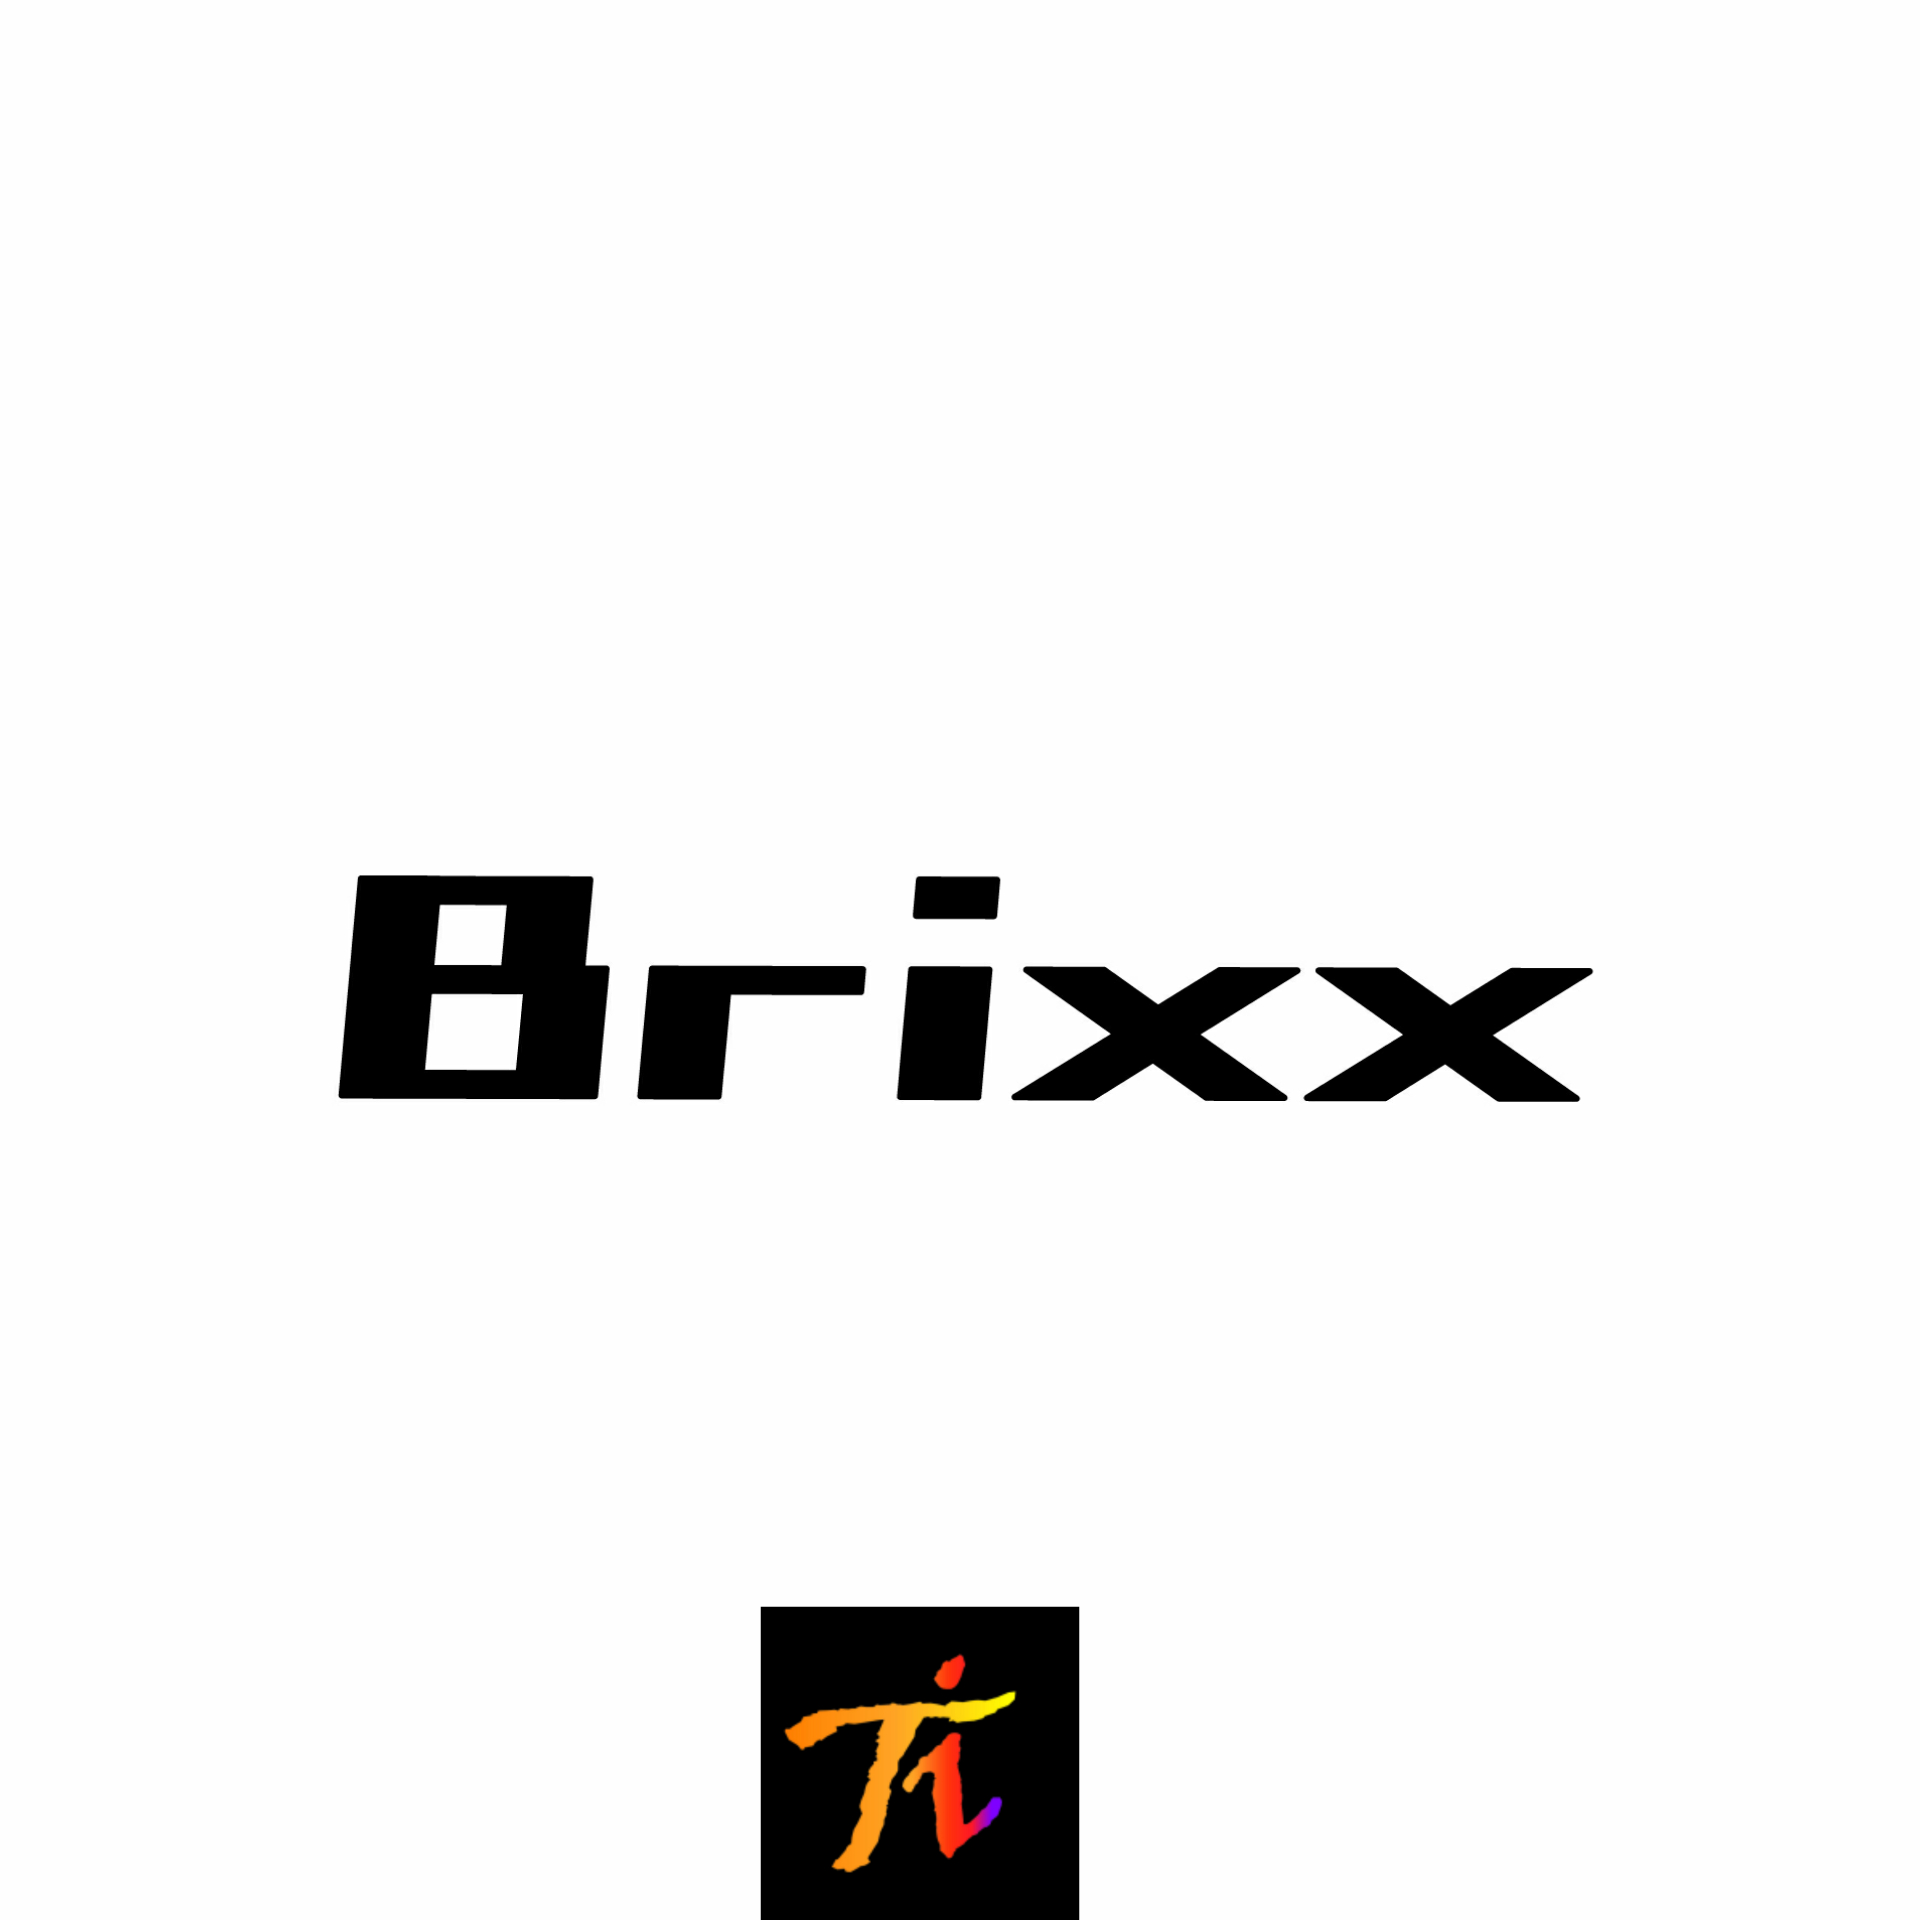 BRIXX